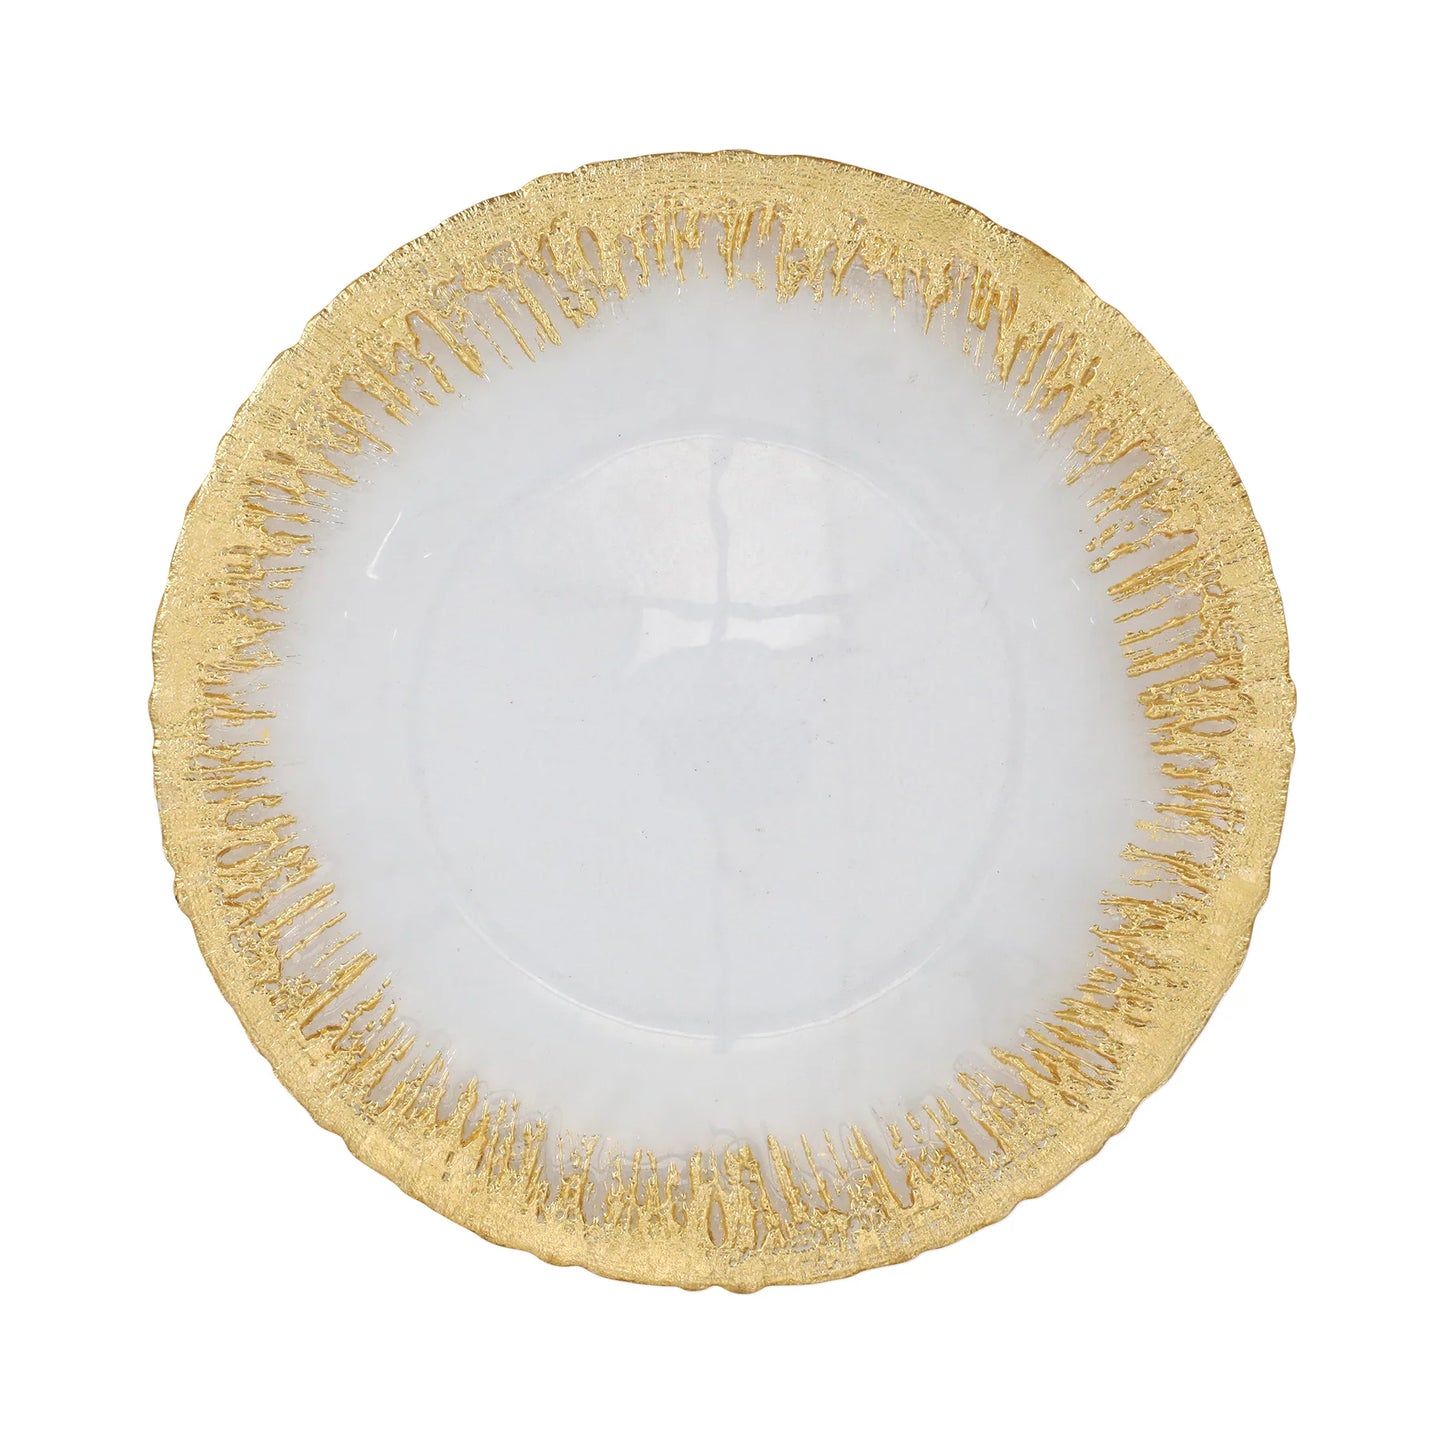 Vietri Rufolo Glass Gold Service Plate/Charger